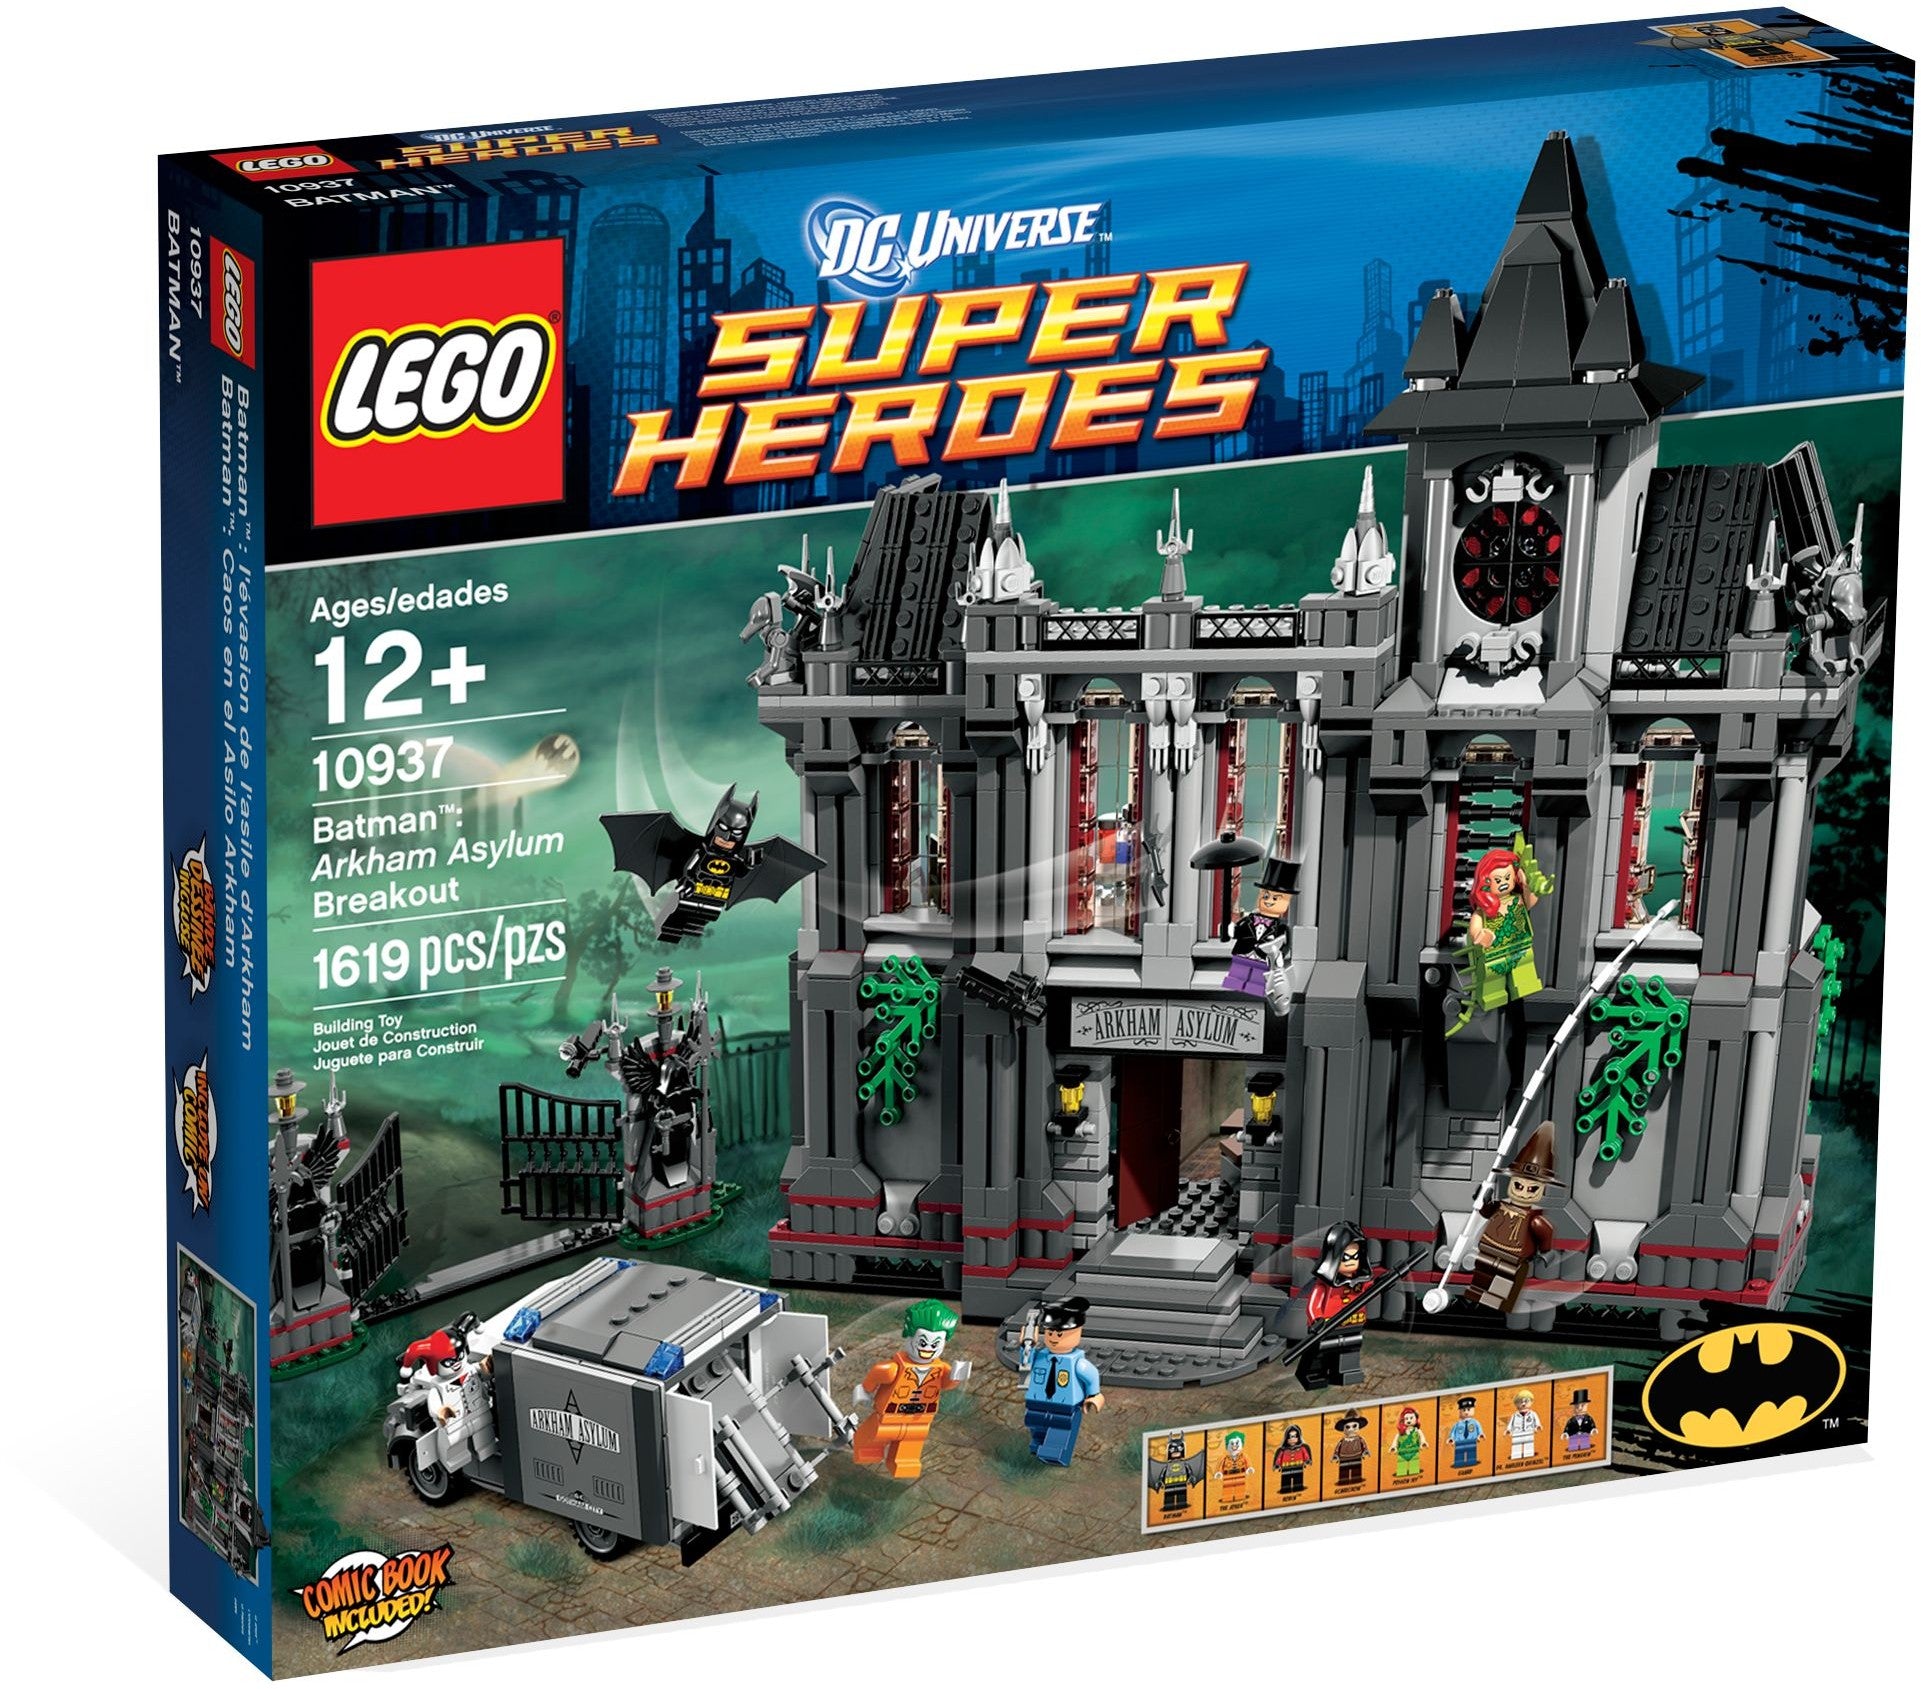 Lego Exclusive Super Heroes 10937 - Batman Arkham Asylum